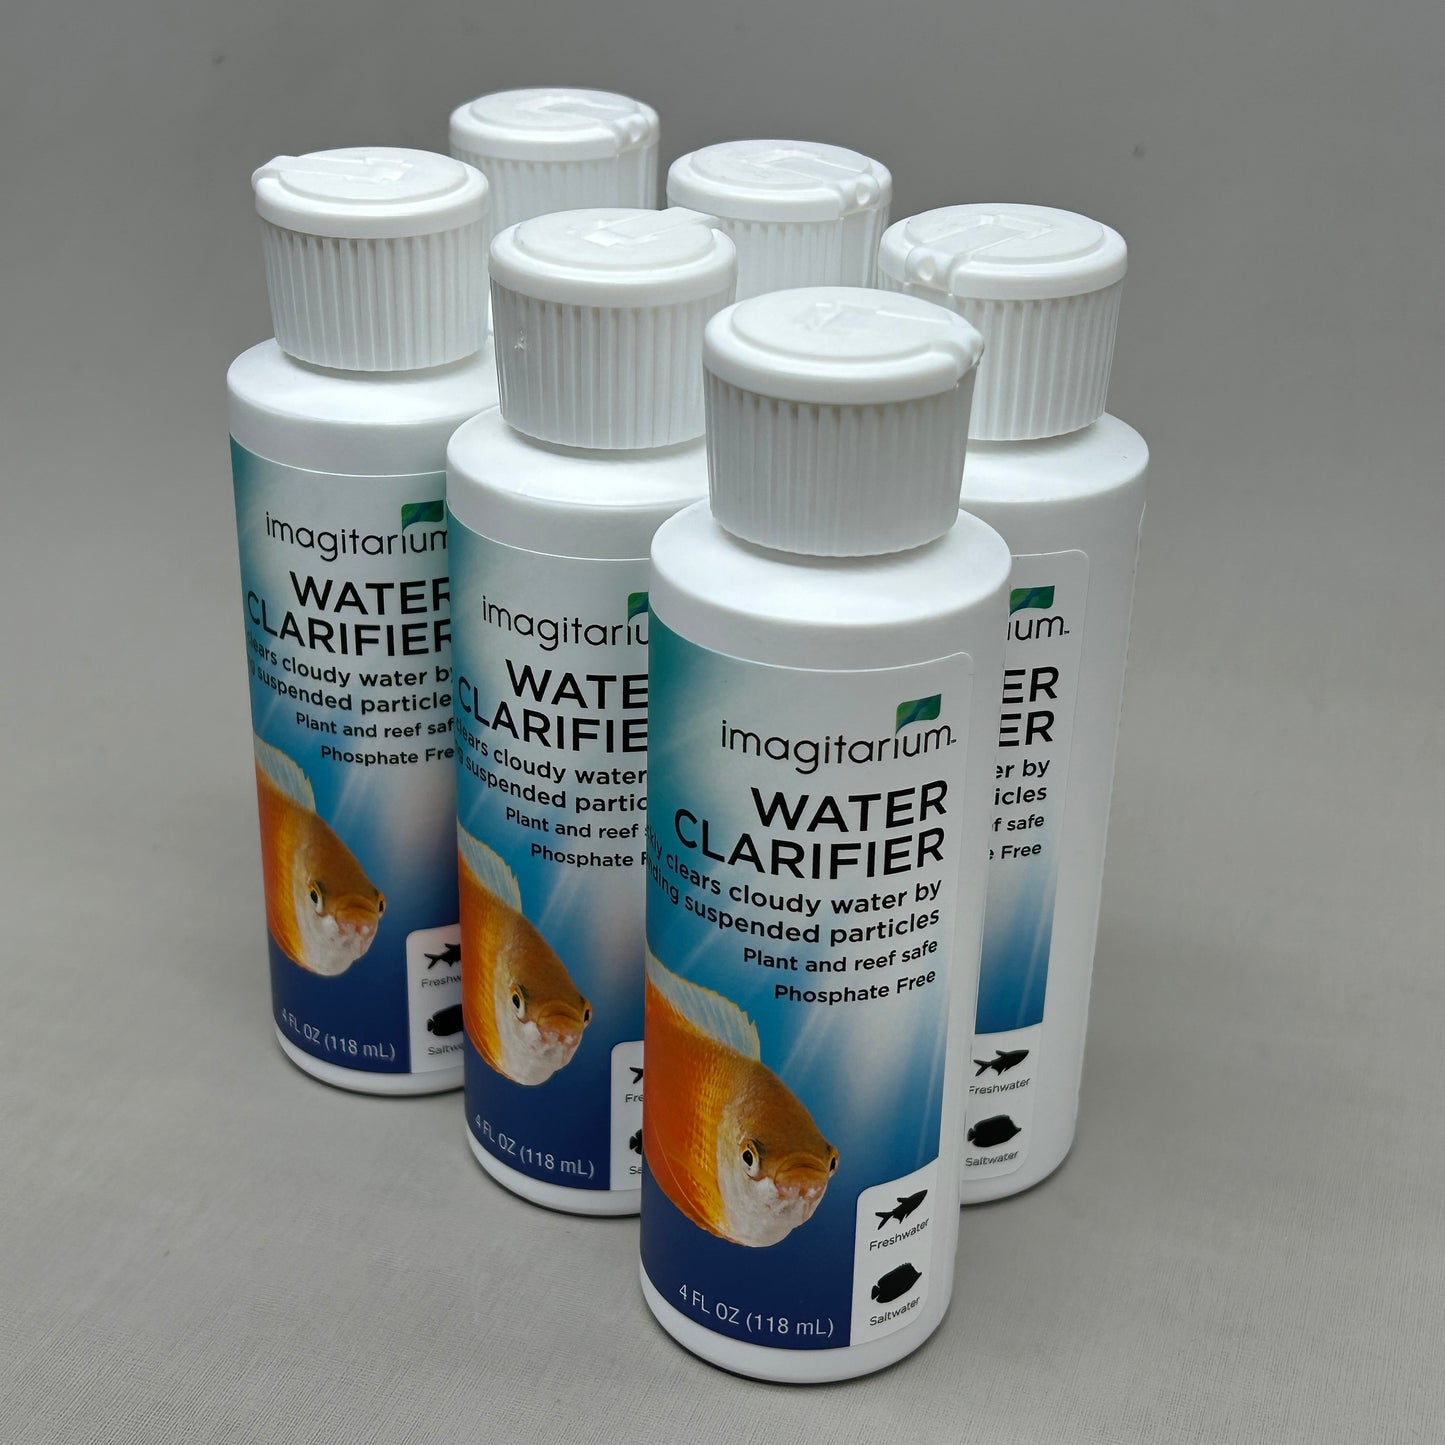 IMAGITARIUM Case of 12 Water Clarifier Freshwater & Saltwater 4OZ BB 06/25 (New)